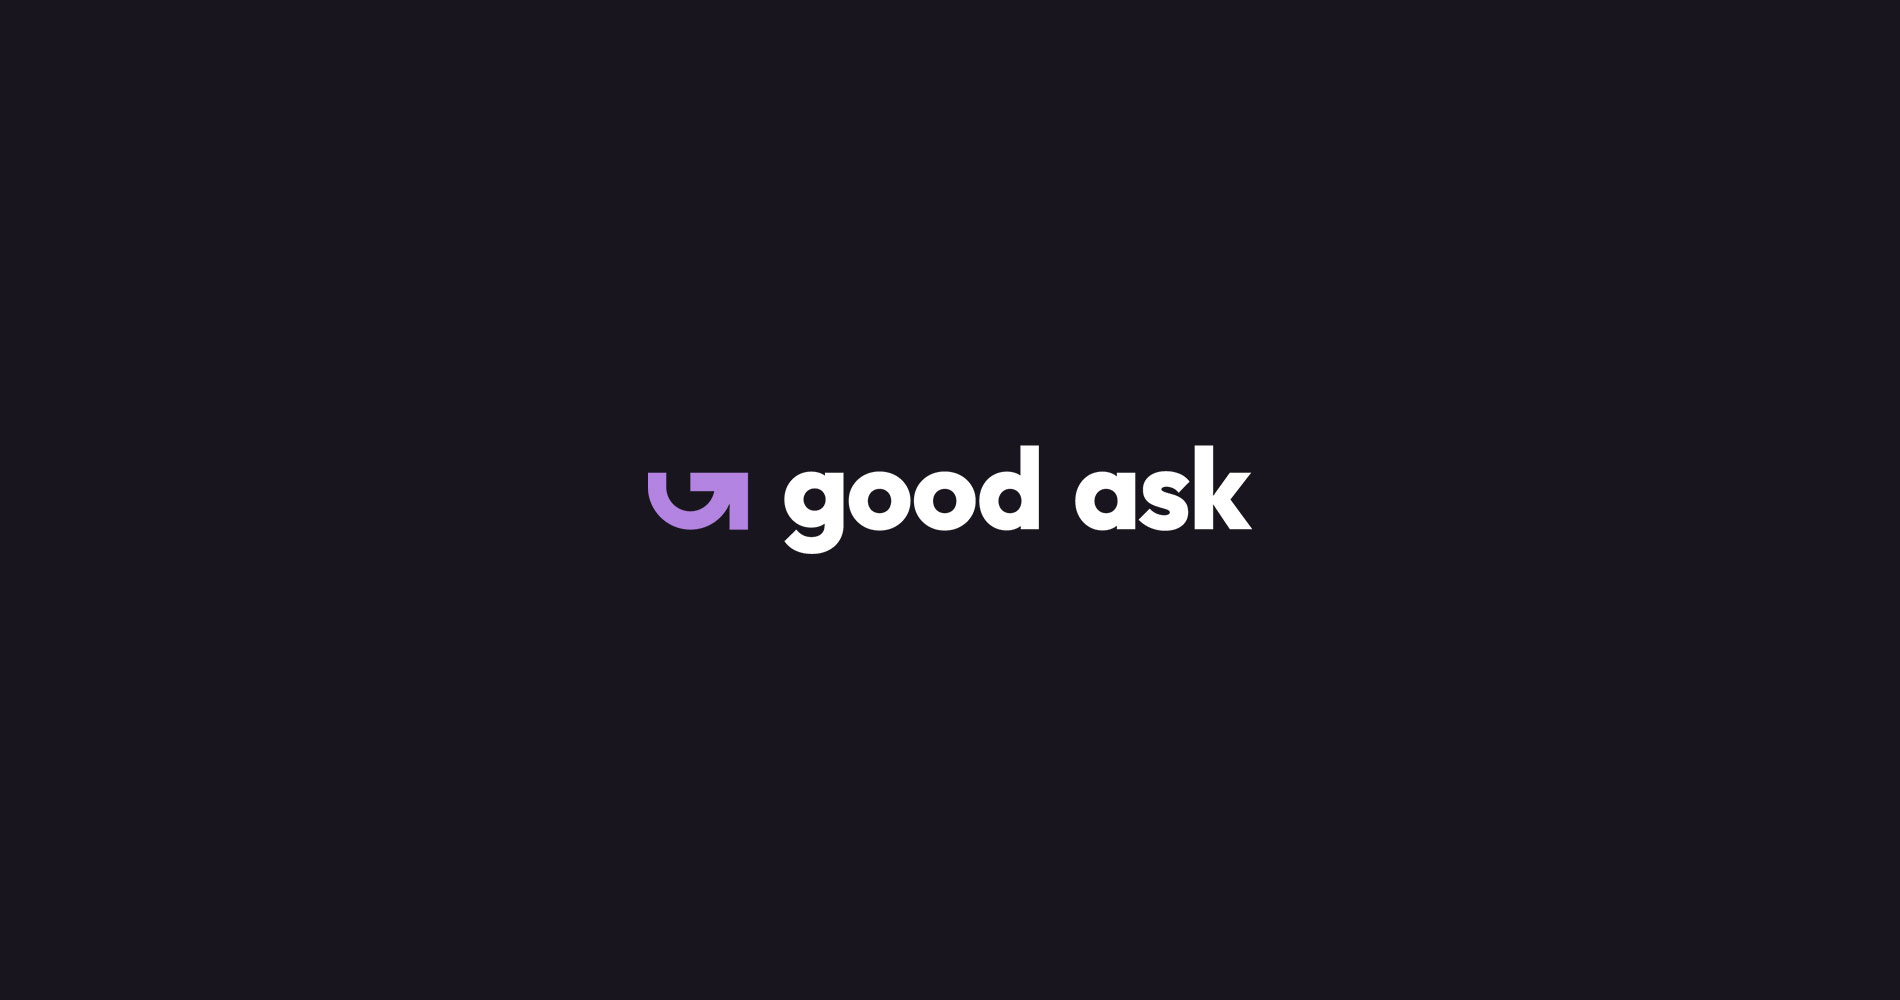 Good Ask Nonprofit Image